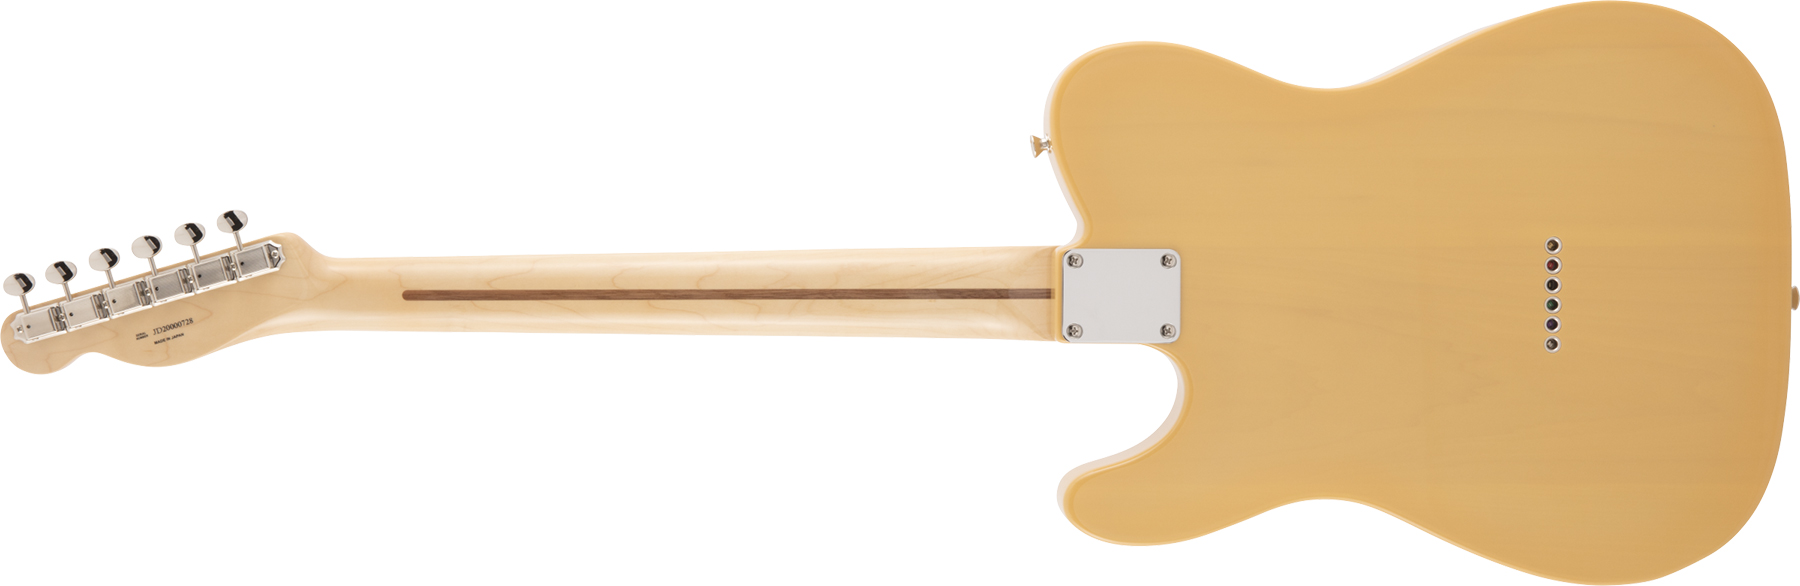 Fender Tele Traditional 50s Jap Mn - Butterscotch Blonde - Televorm elektrische gitaar - Variation 1